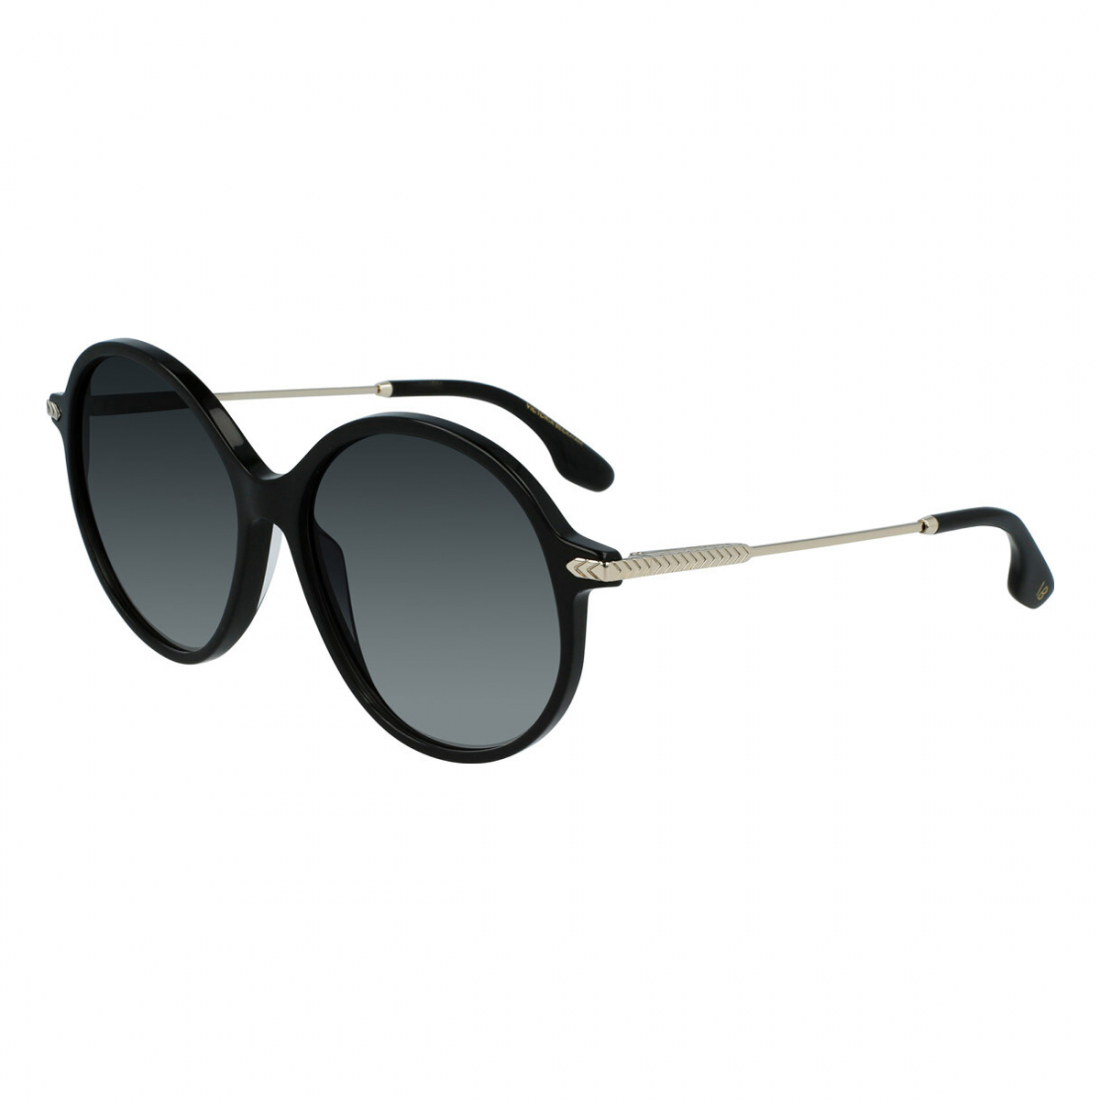 Women's 'VB632S (001)' Sunglasses